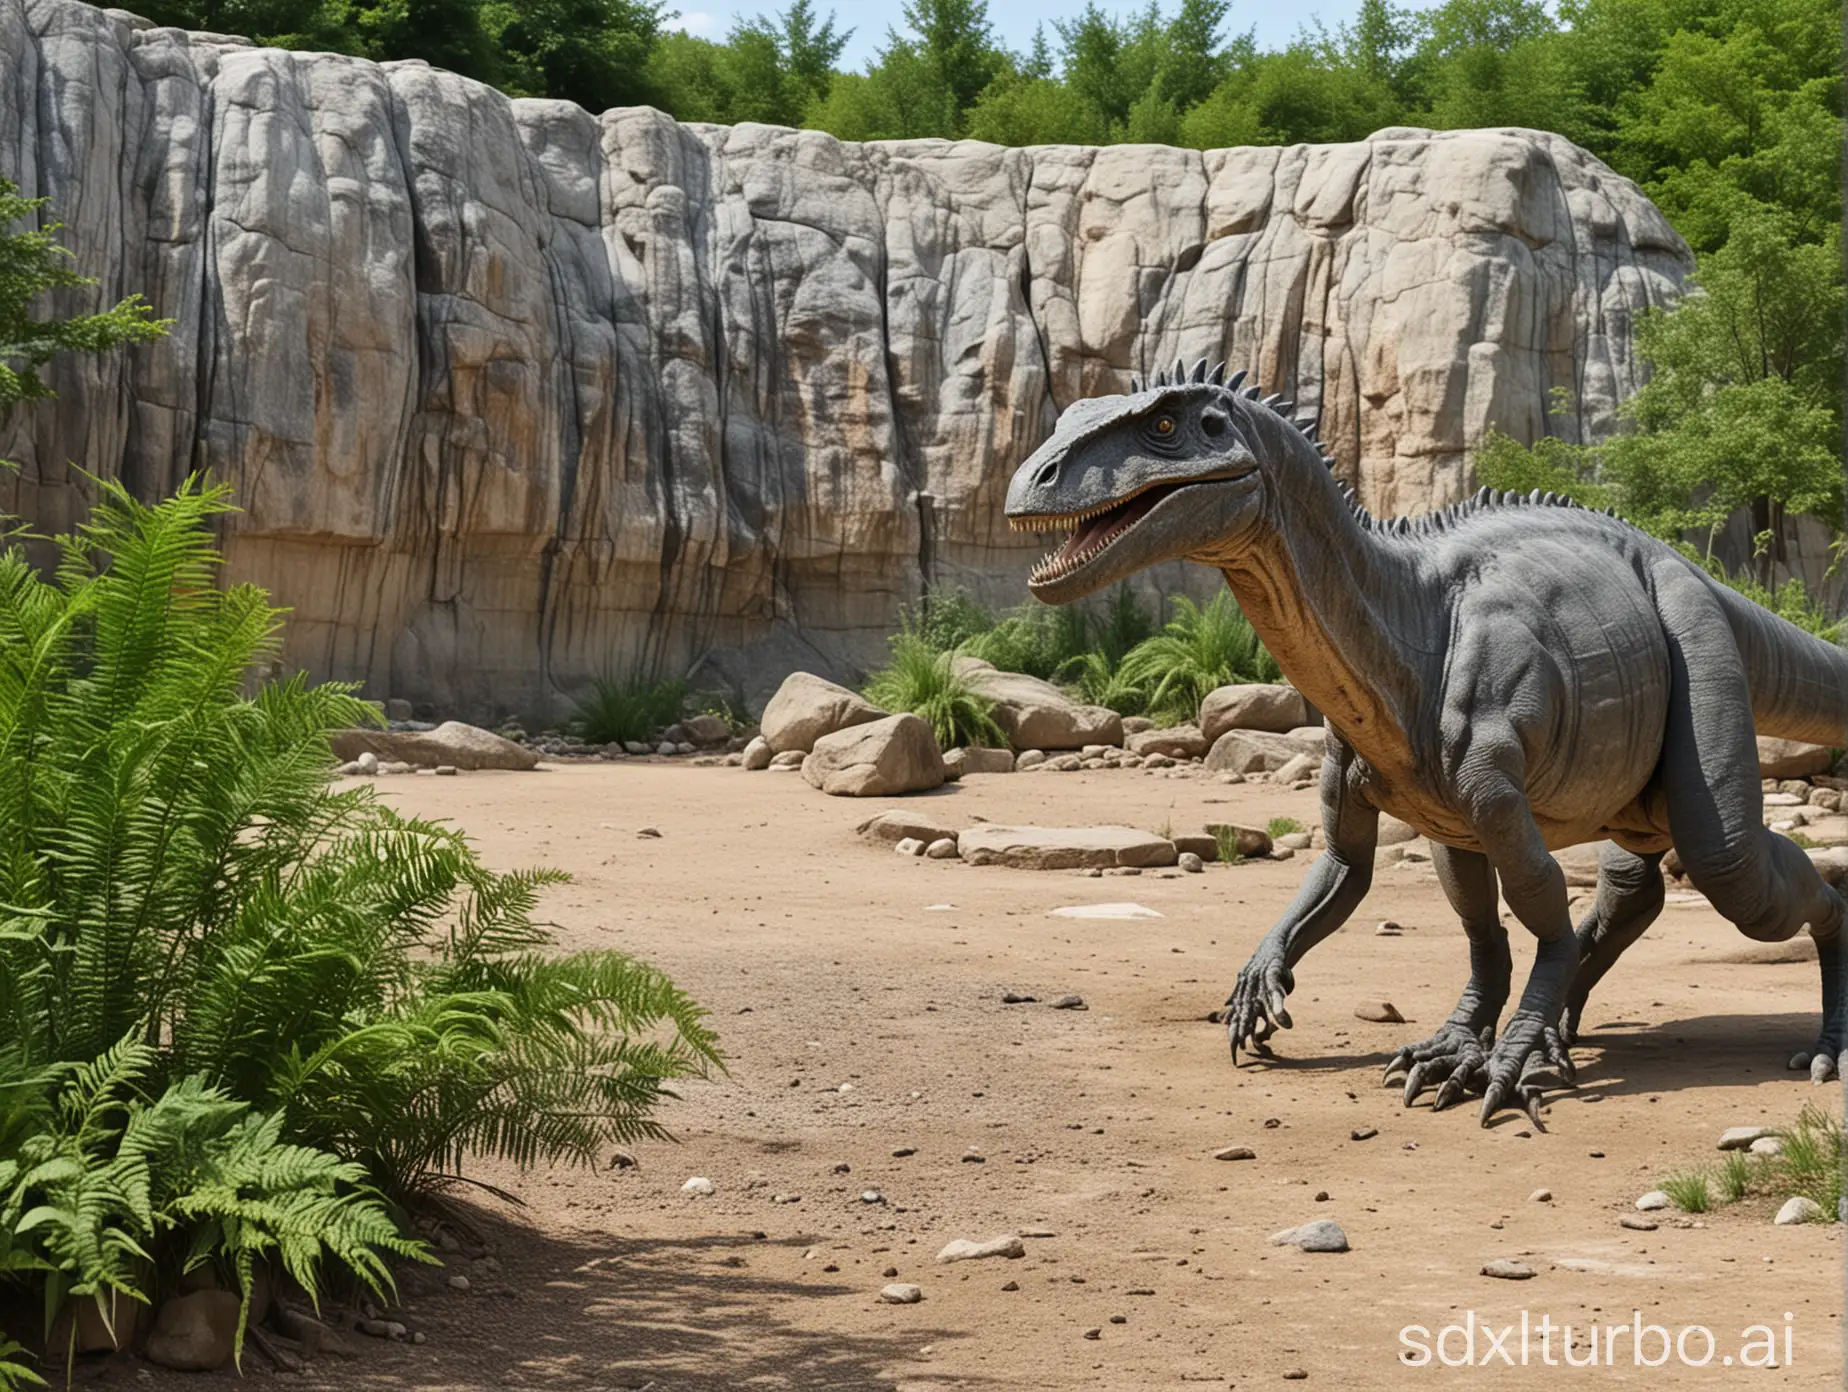 Hintergrund zoo gehege with Allosaurus beforene pflastersteine